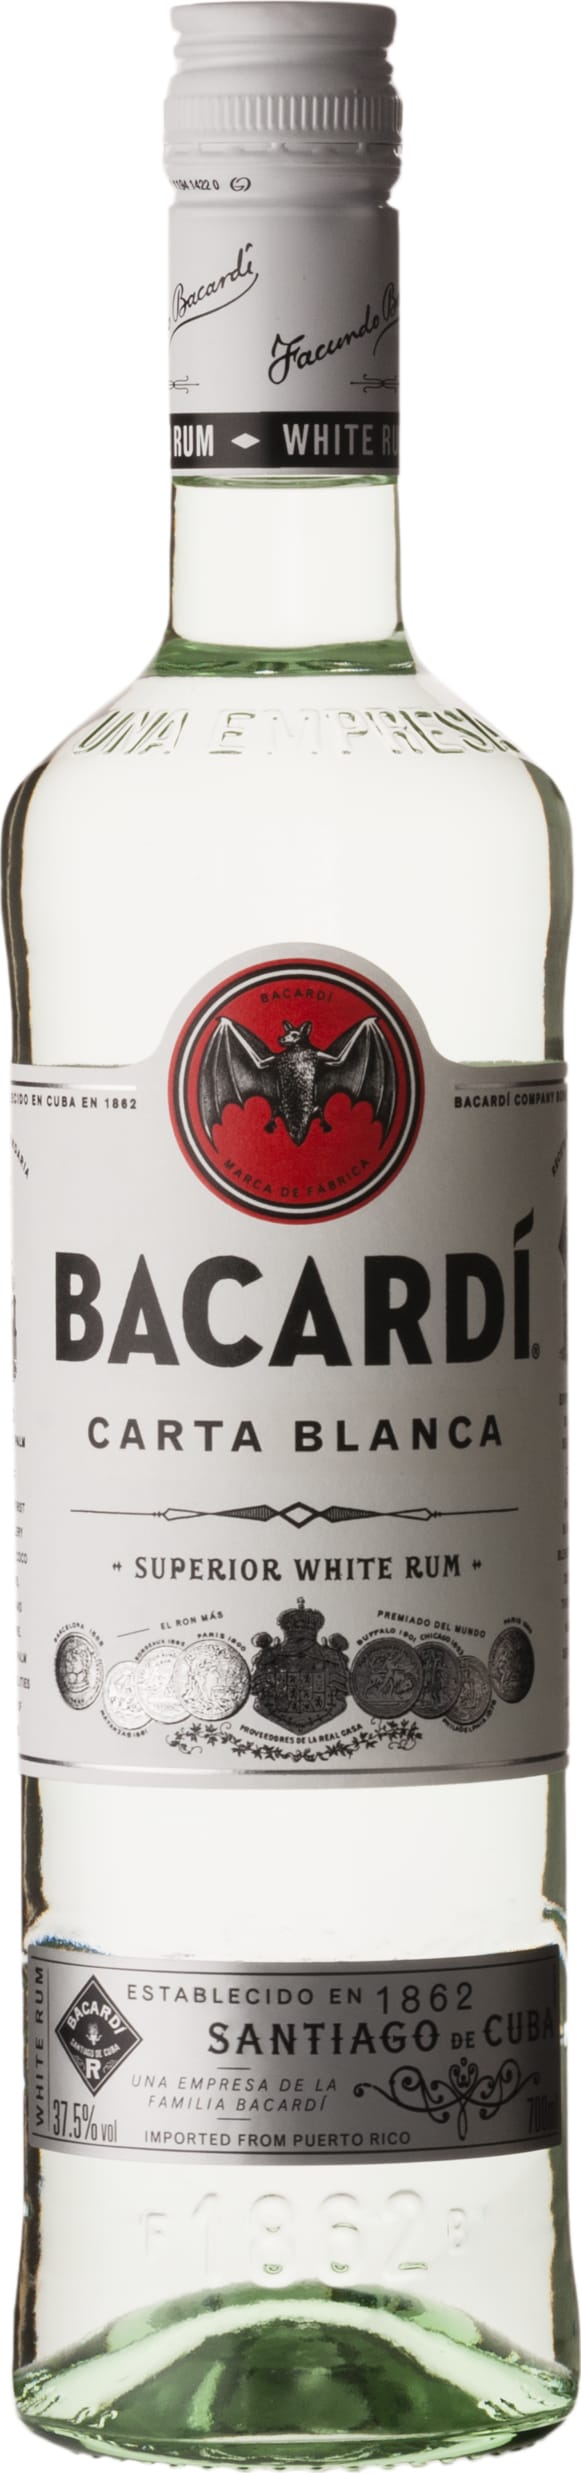 Bacardi Bacardi Carta Blanca Rum 70cl NV - Buy Bacardi Wines from GREAT WINES DIRECT wine shop